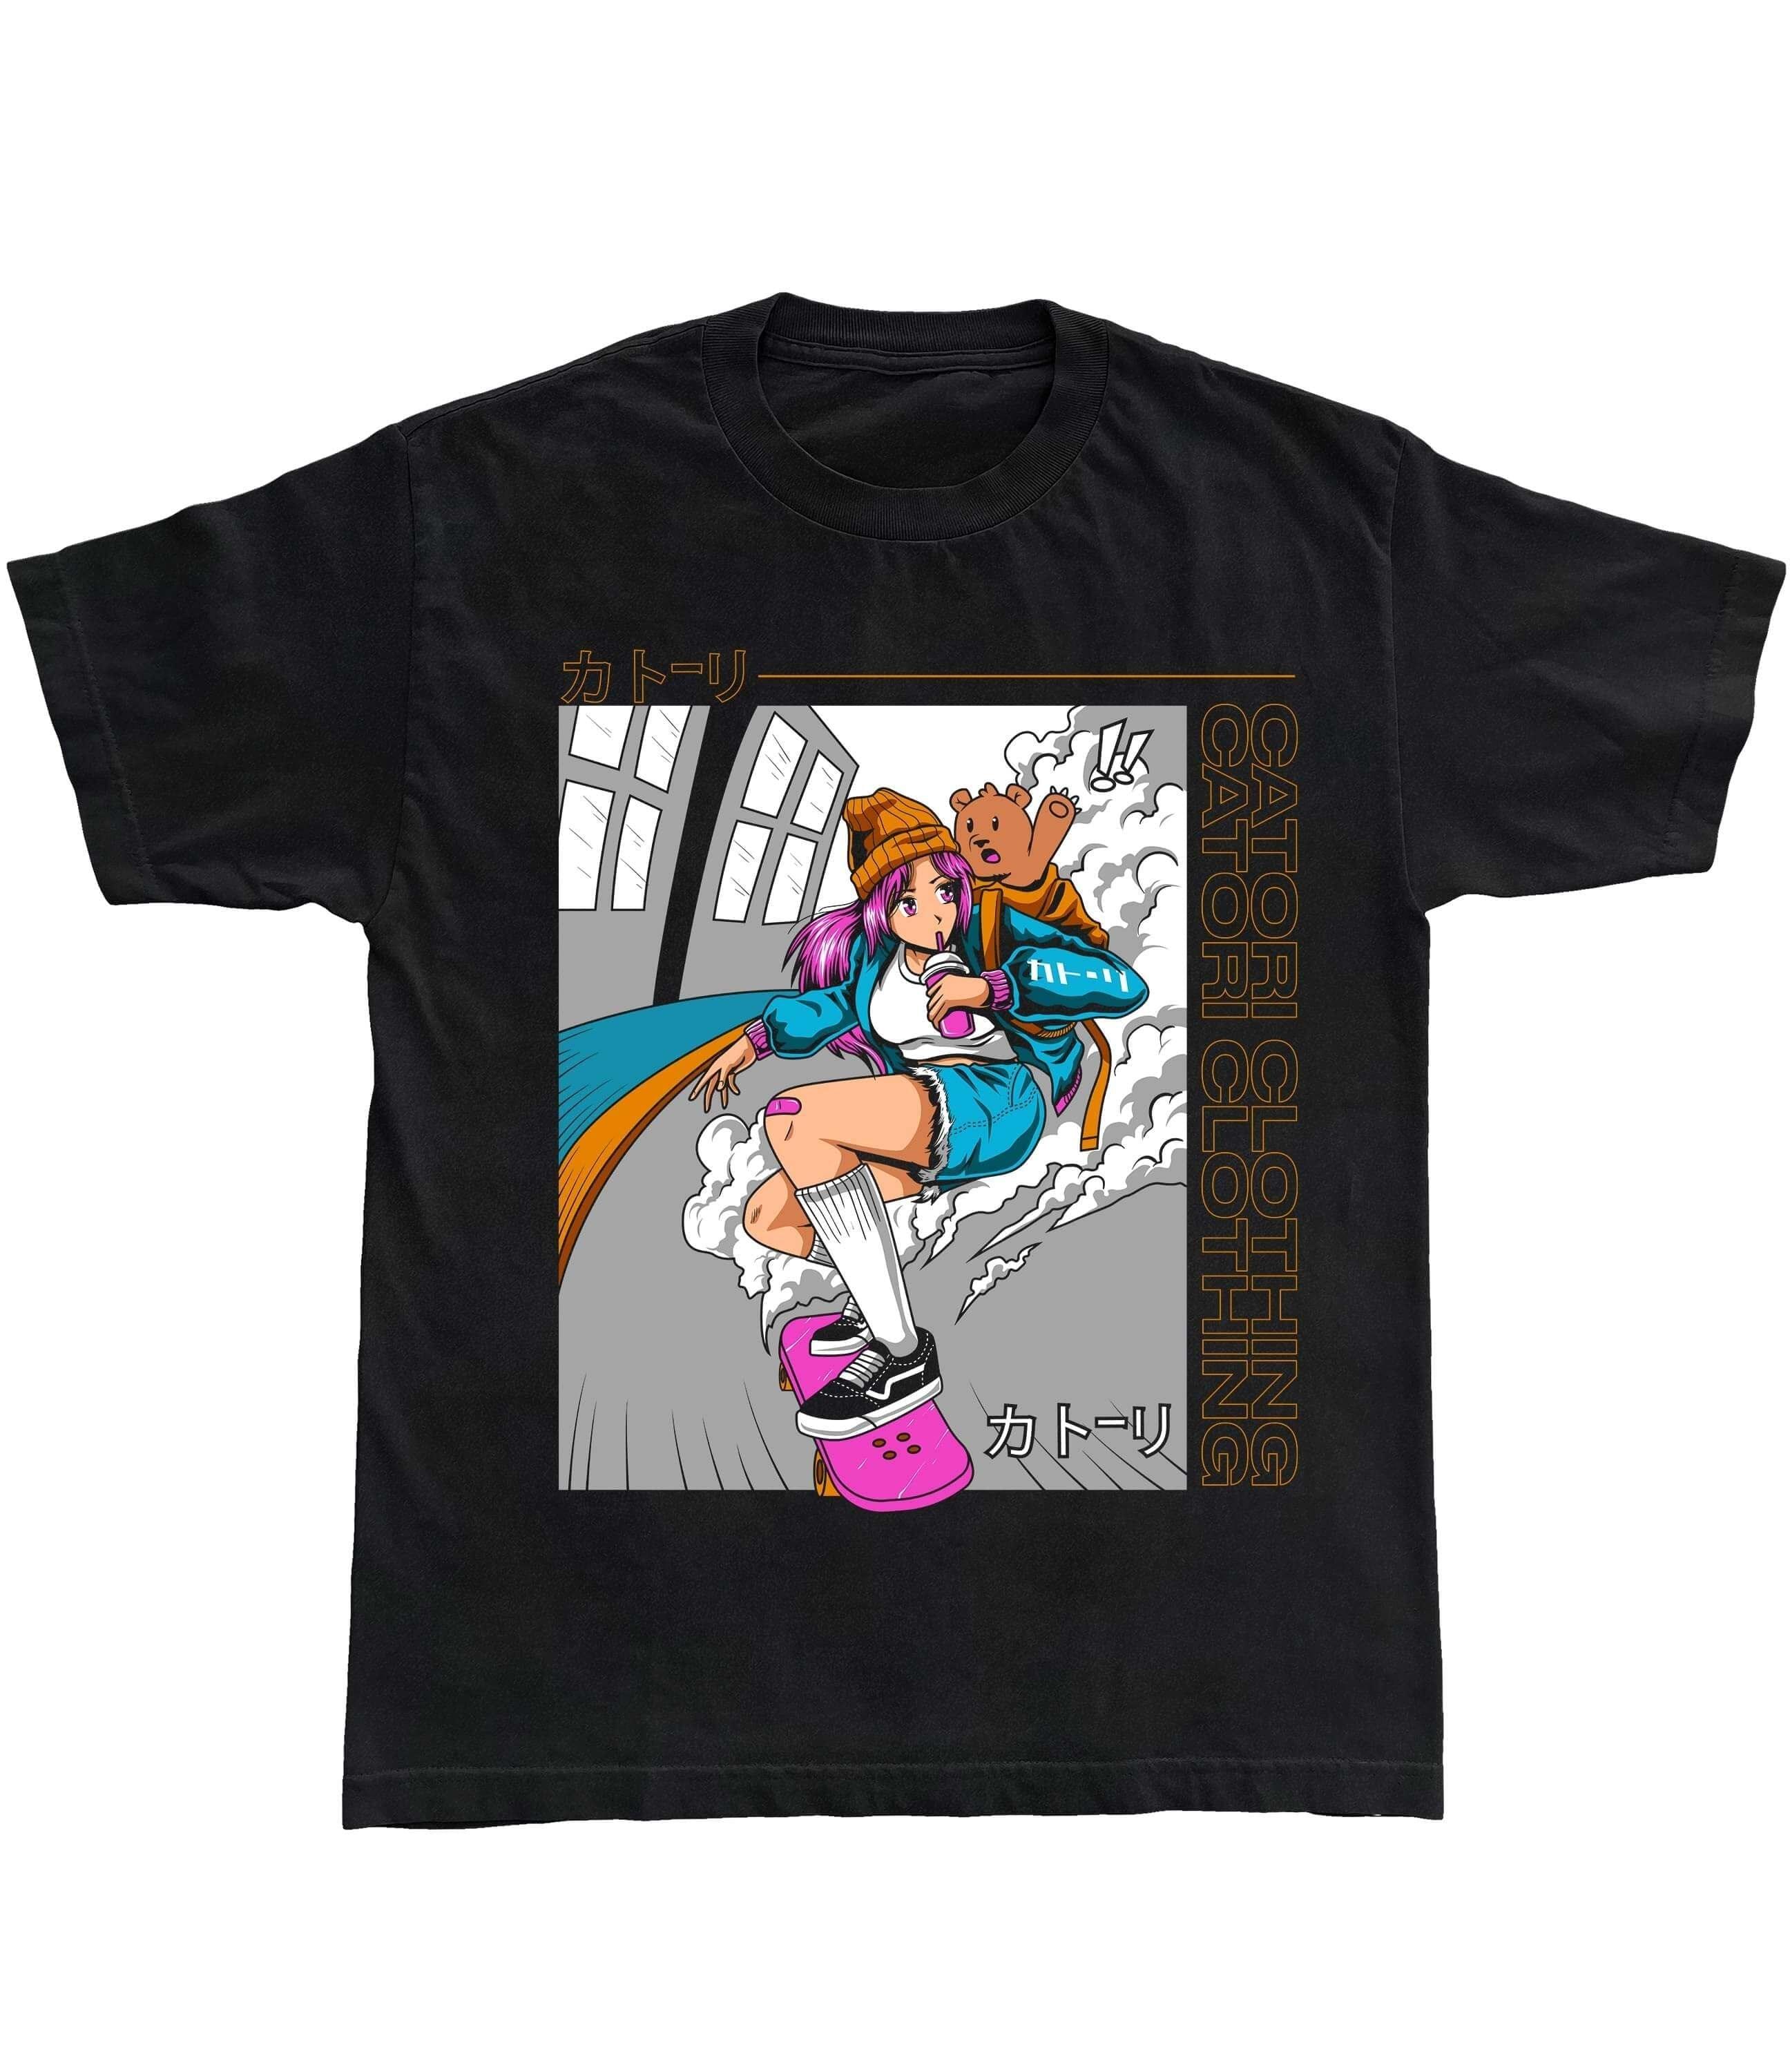 SKATER GIRL T-SHIRT at Catori Clothing | Graphic & Anime Tees, Hoodies & Sweatshirts 